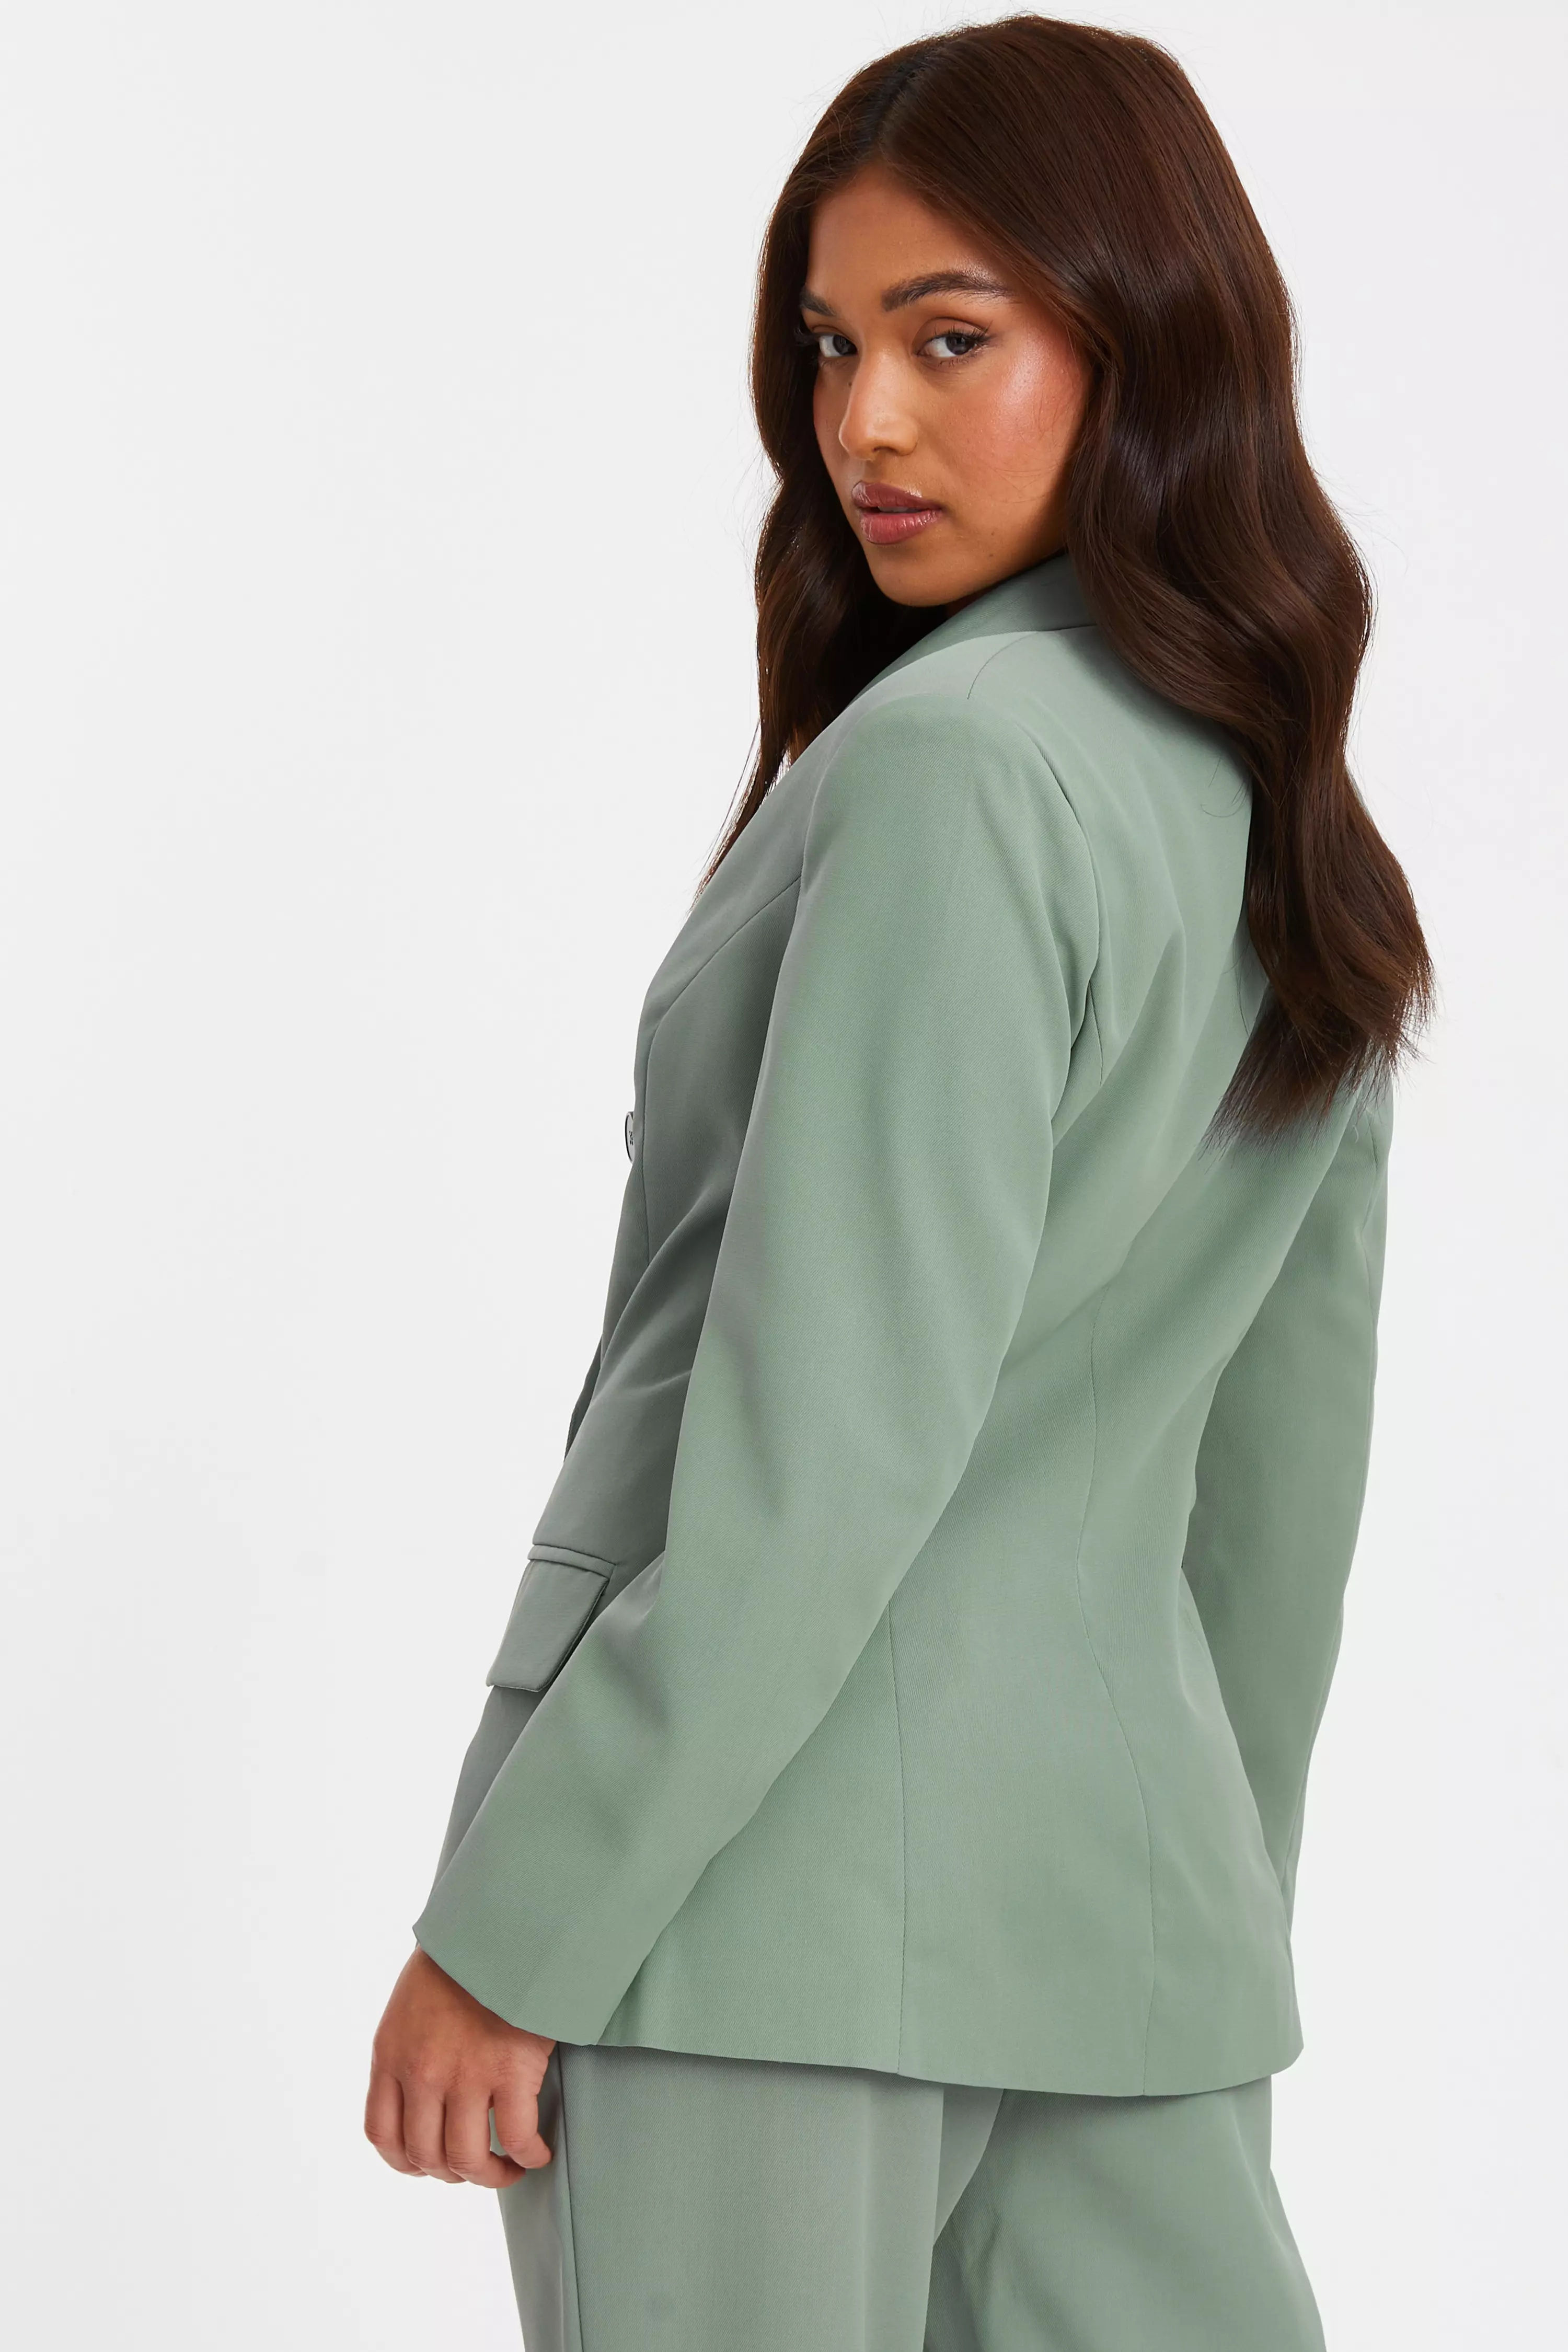 Petite Khaki Tailored Blazer - QUIZ Clothing